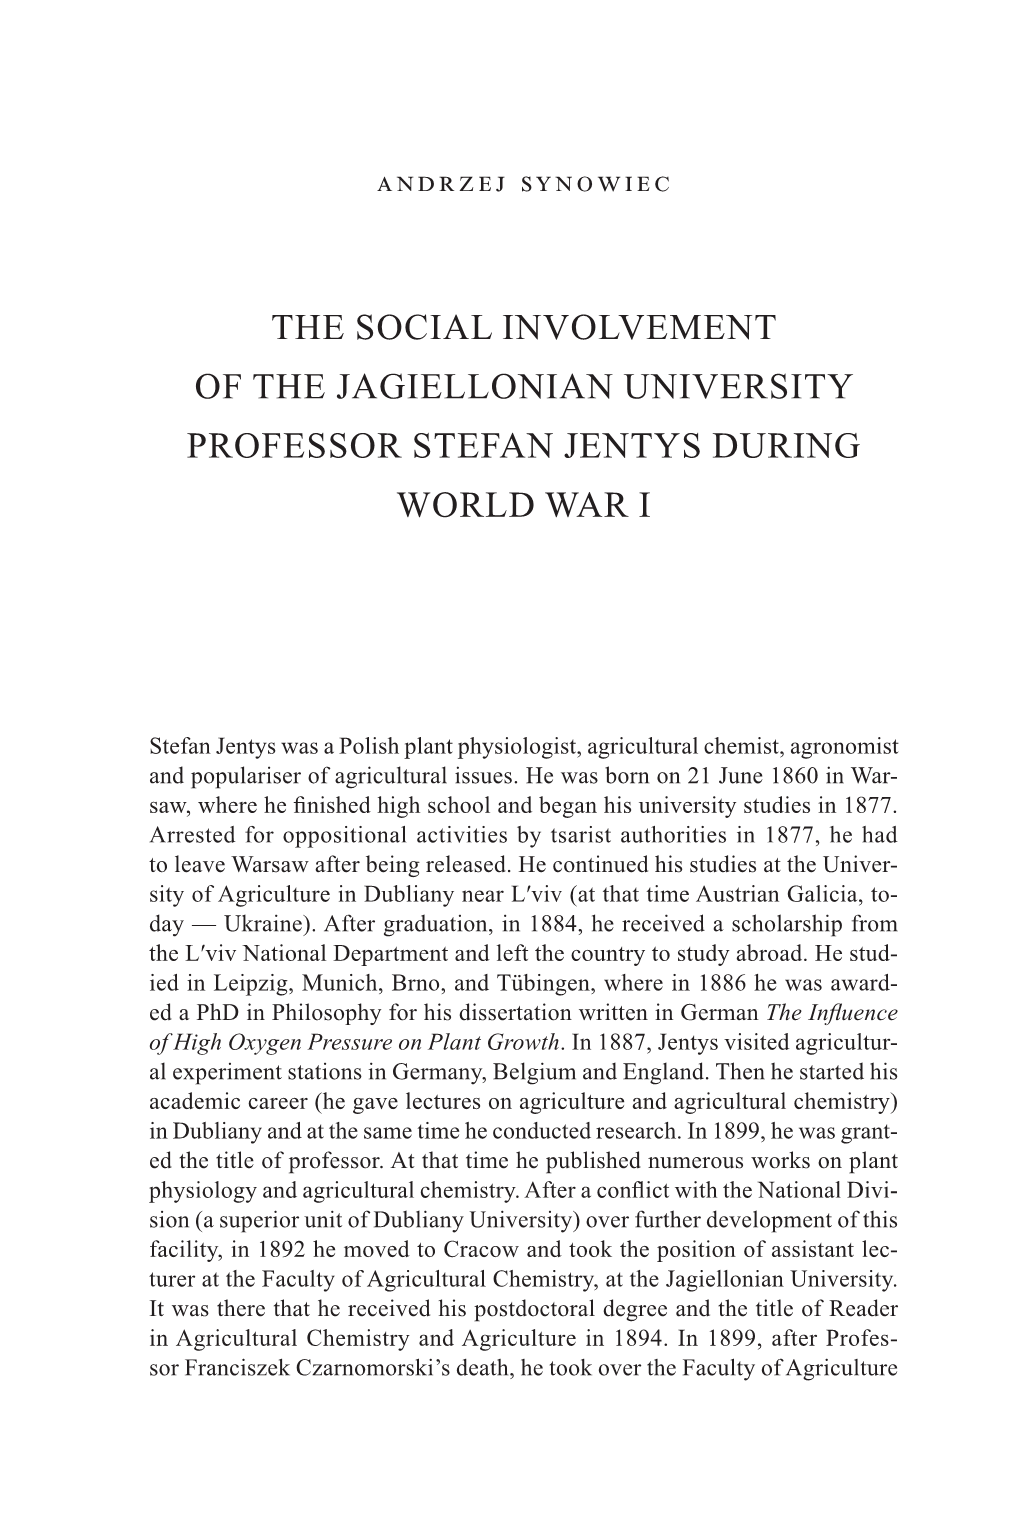 The Social Involvement of the Jagiellonian University Professor Stefan Jentys During World War I